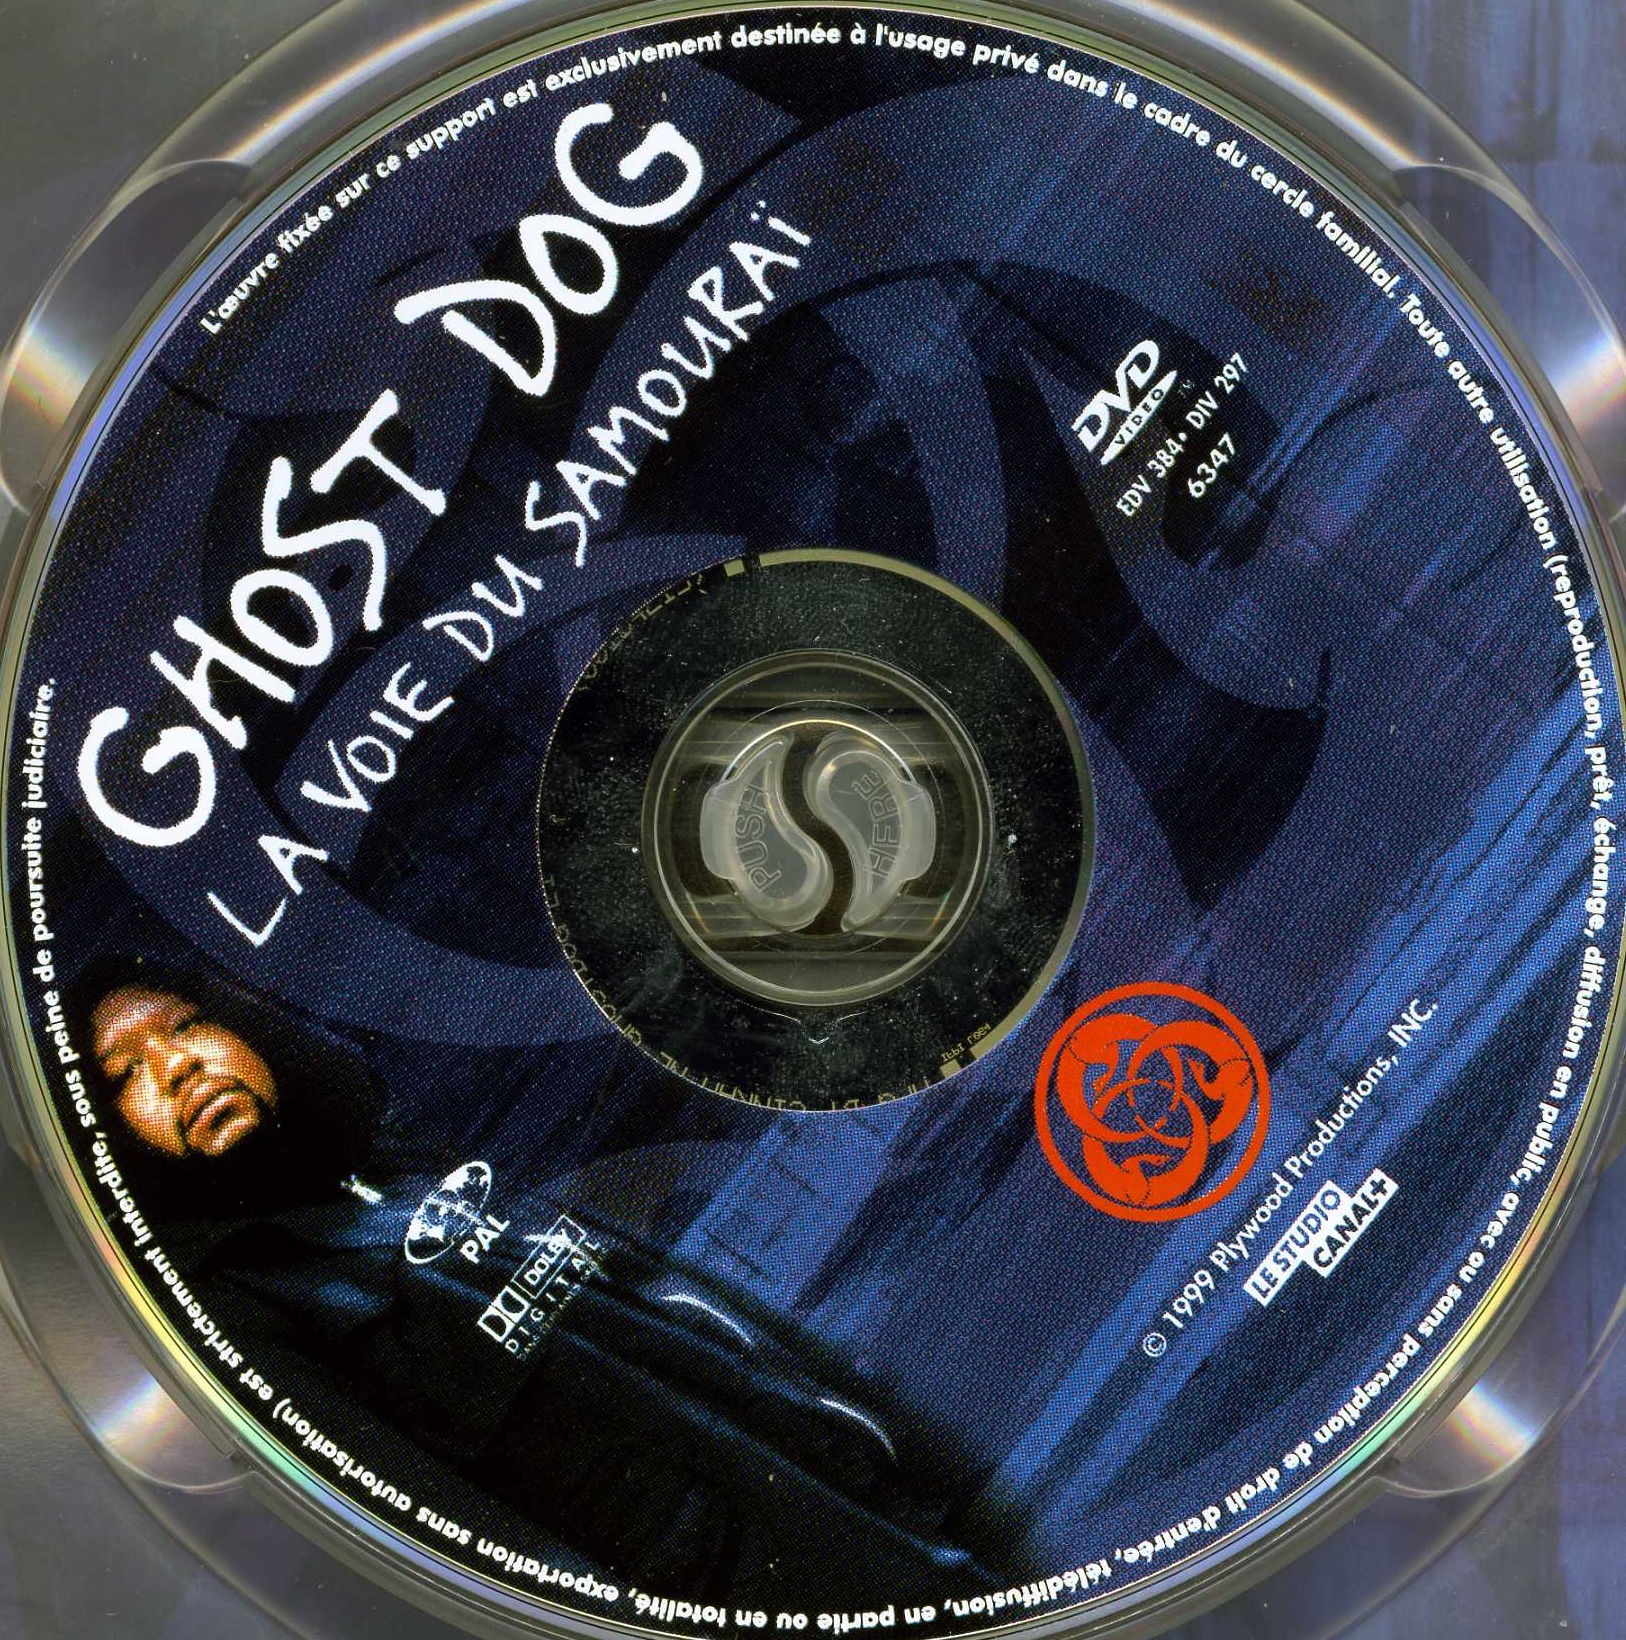 Ghost dog v2